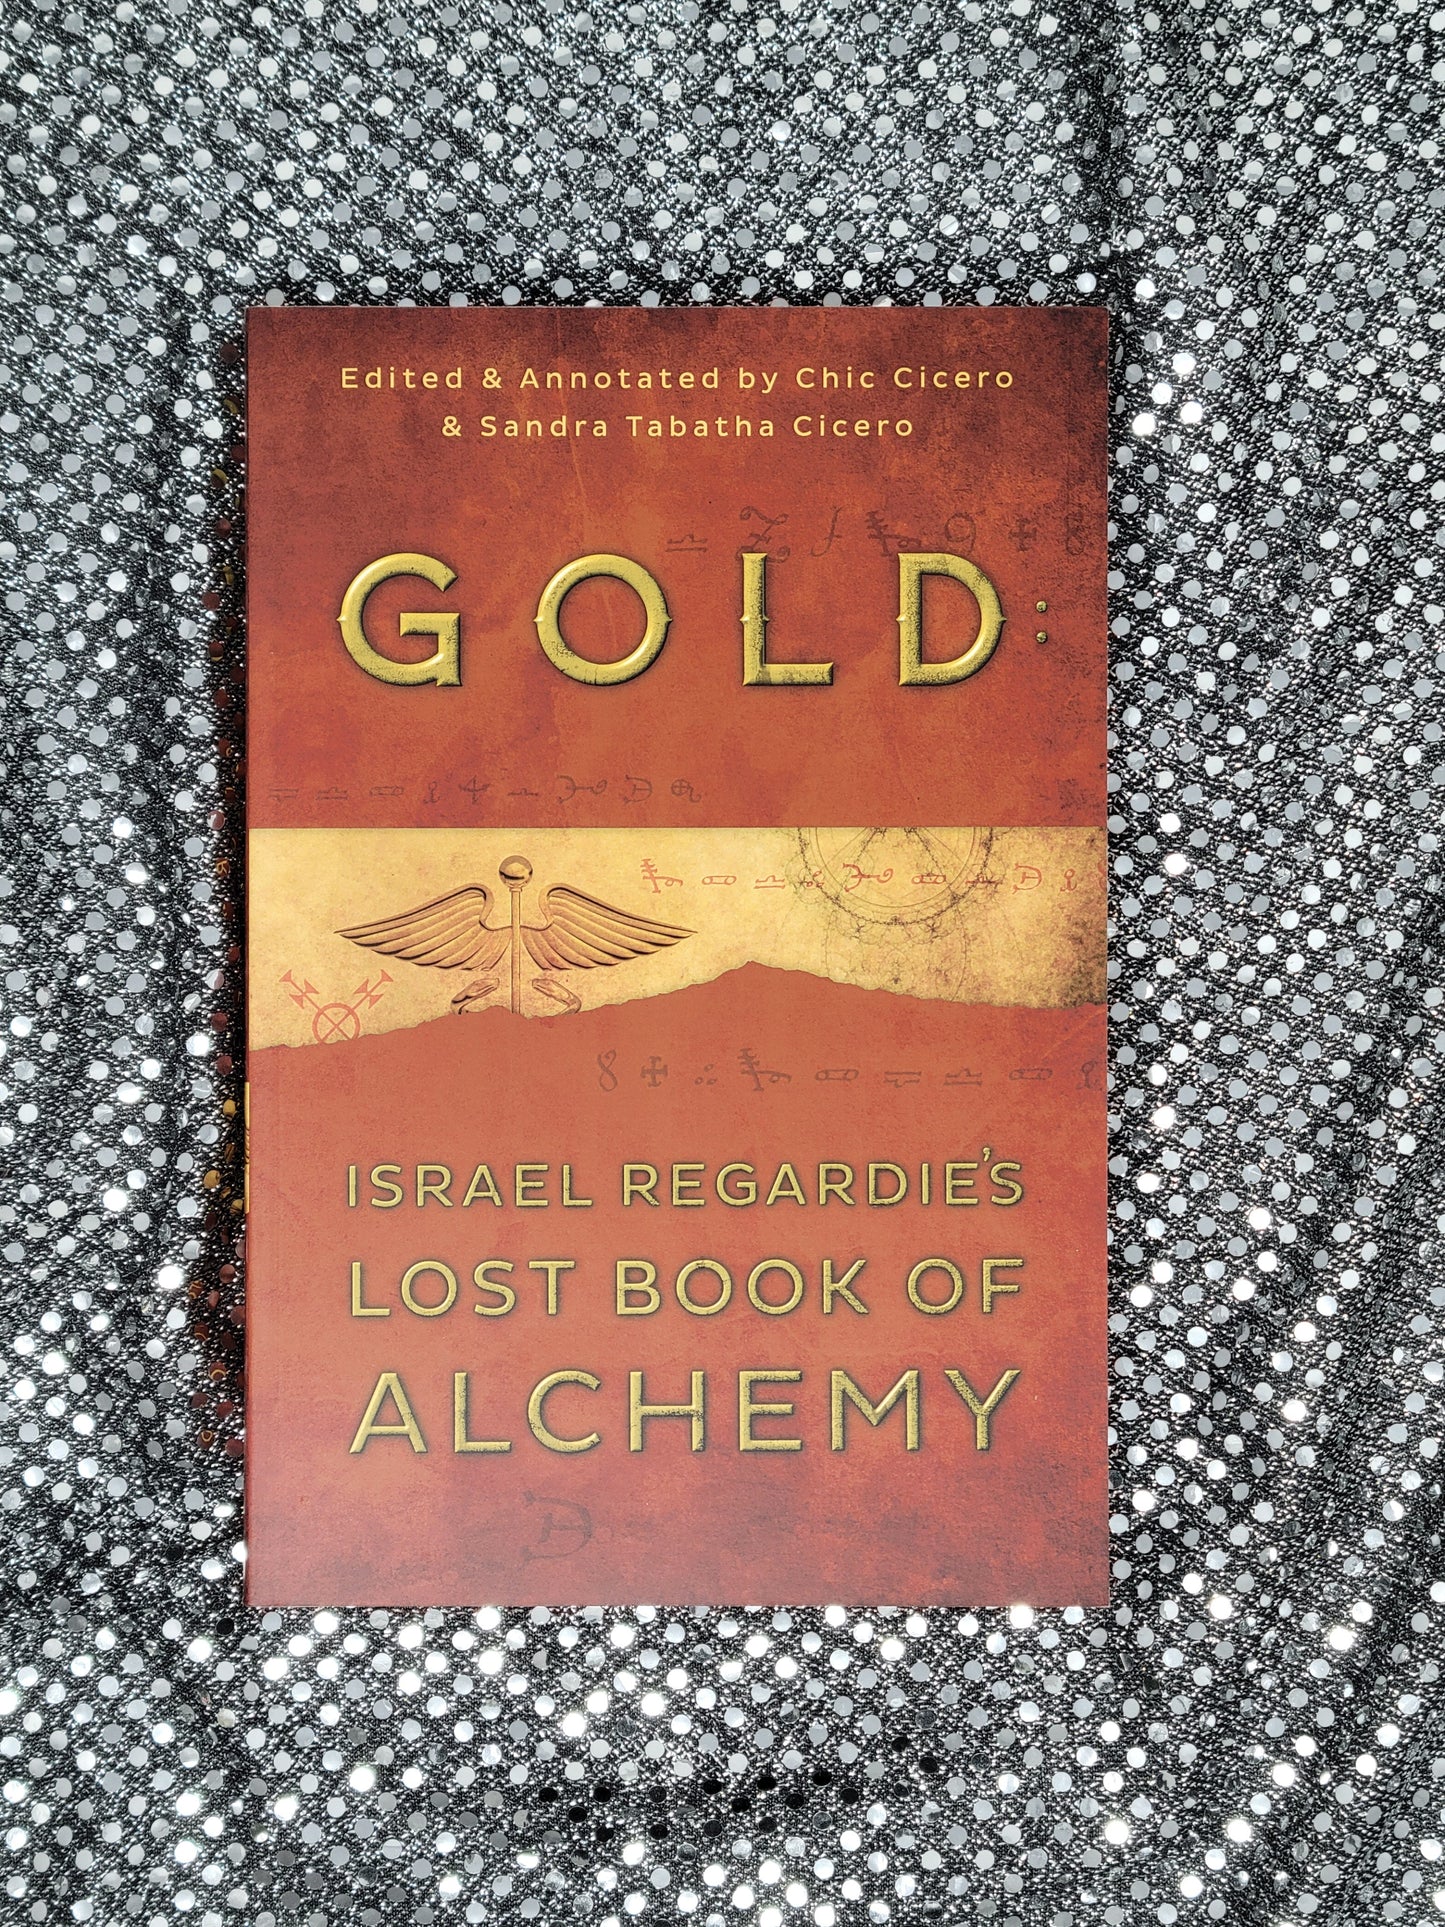 Gold: Israel Regardie's Lost Book of Alchemy- BY ISRAEL REGARDIE, CHIC CICERO, SANDRA TABATHA CICERO